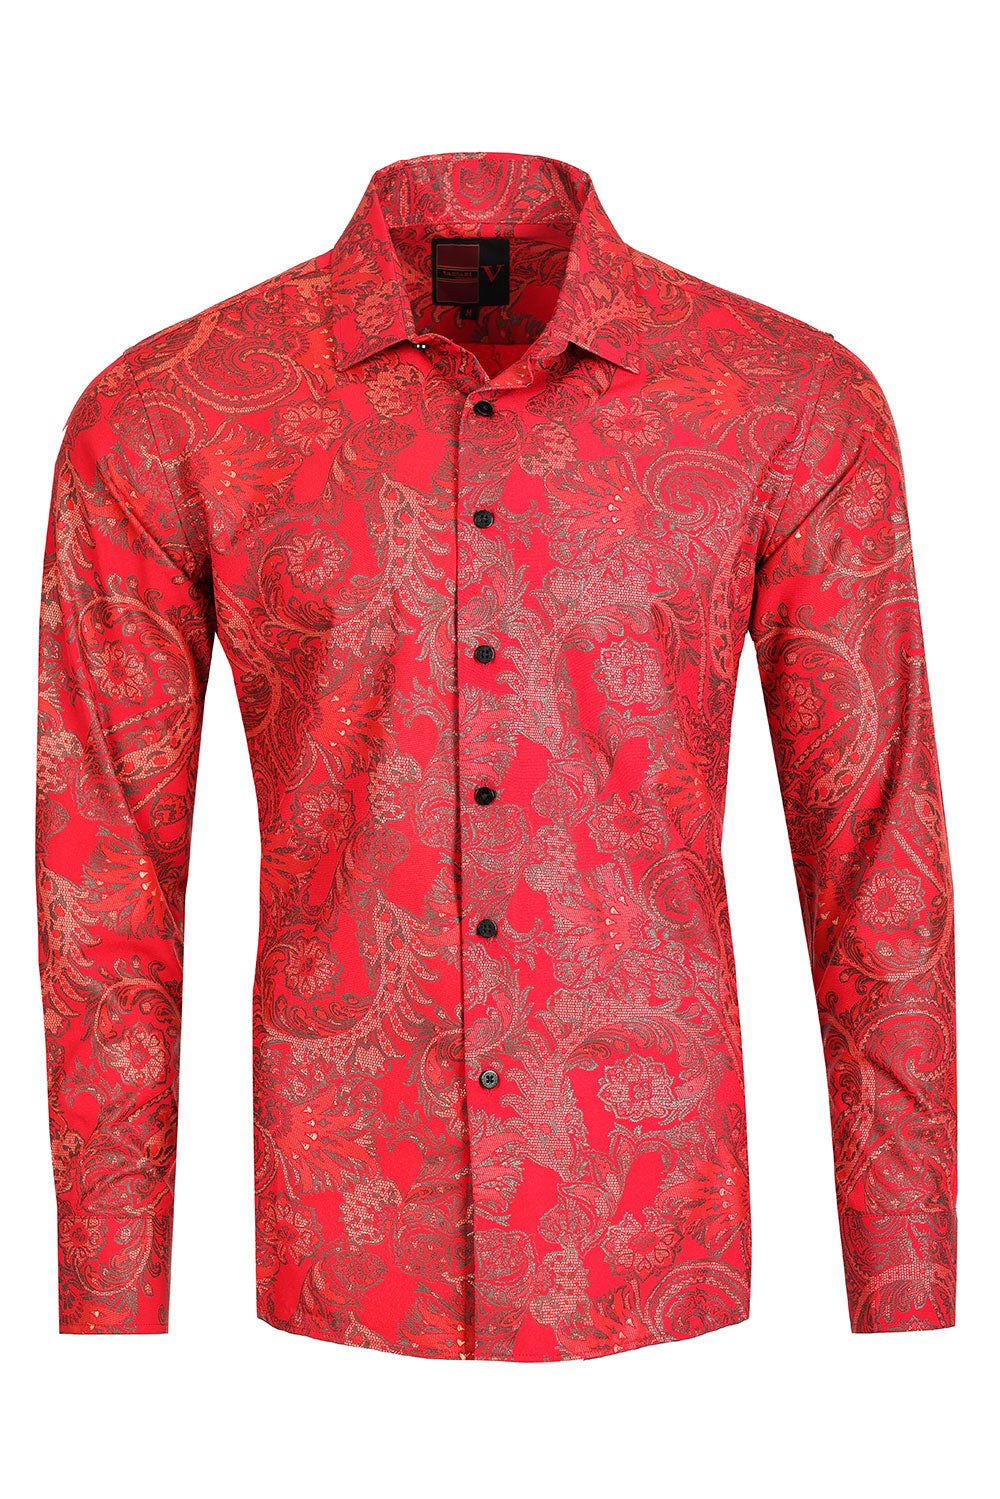 BARABAS Men's Floral Long Sleeve Button Down Shirt 2VS176 Red